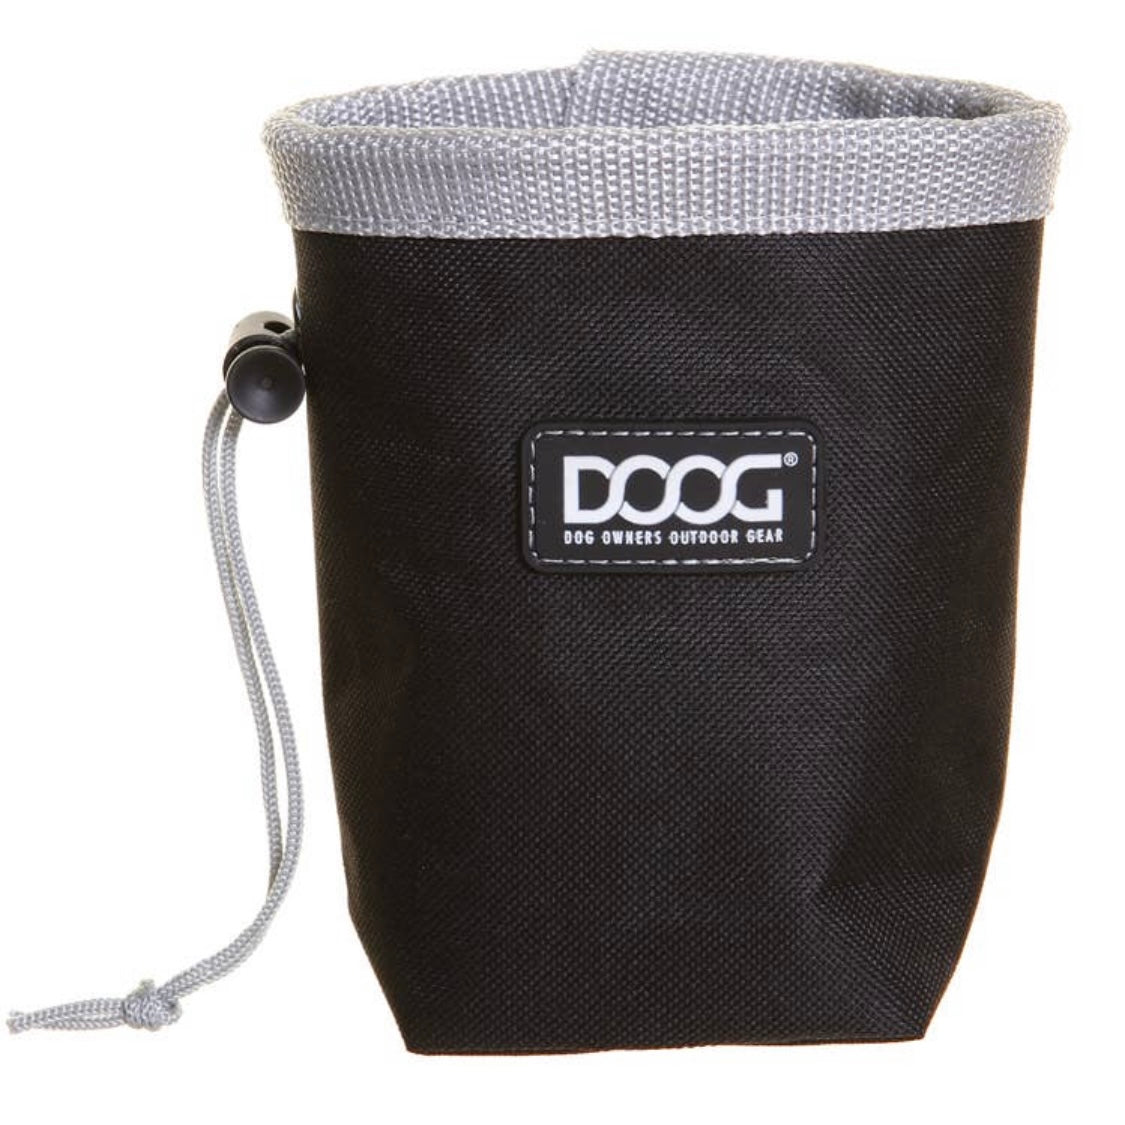 DOOG Good Dog Treat & Training Pouch